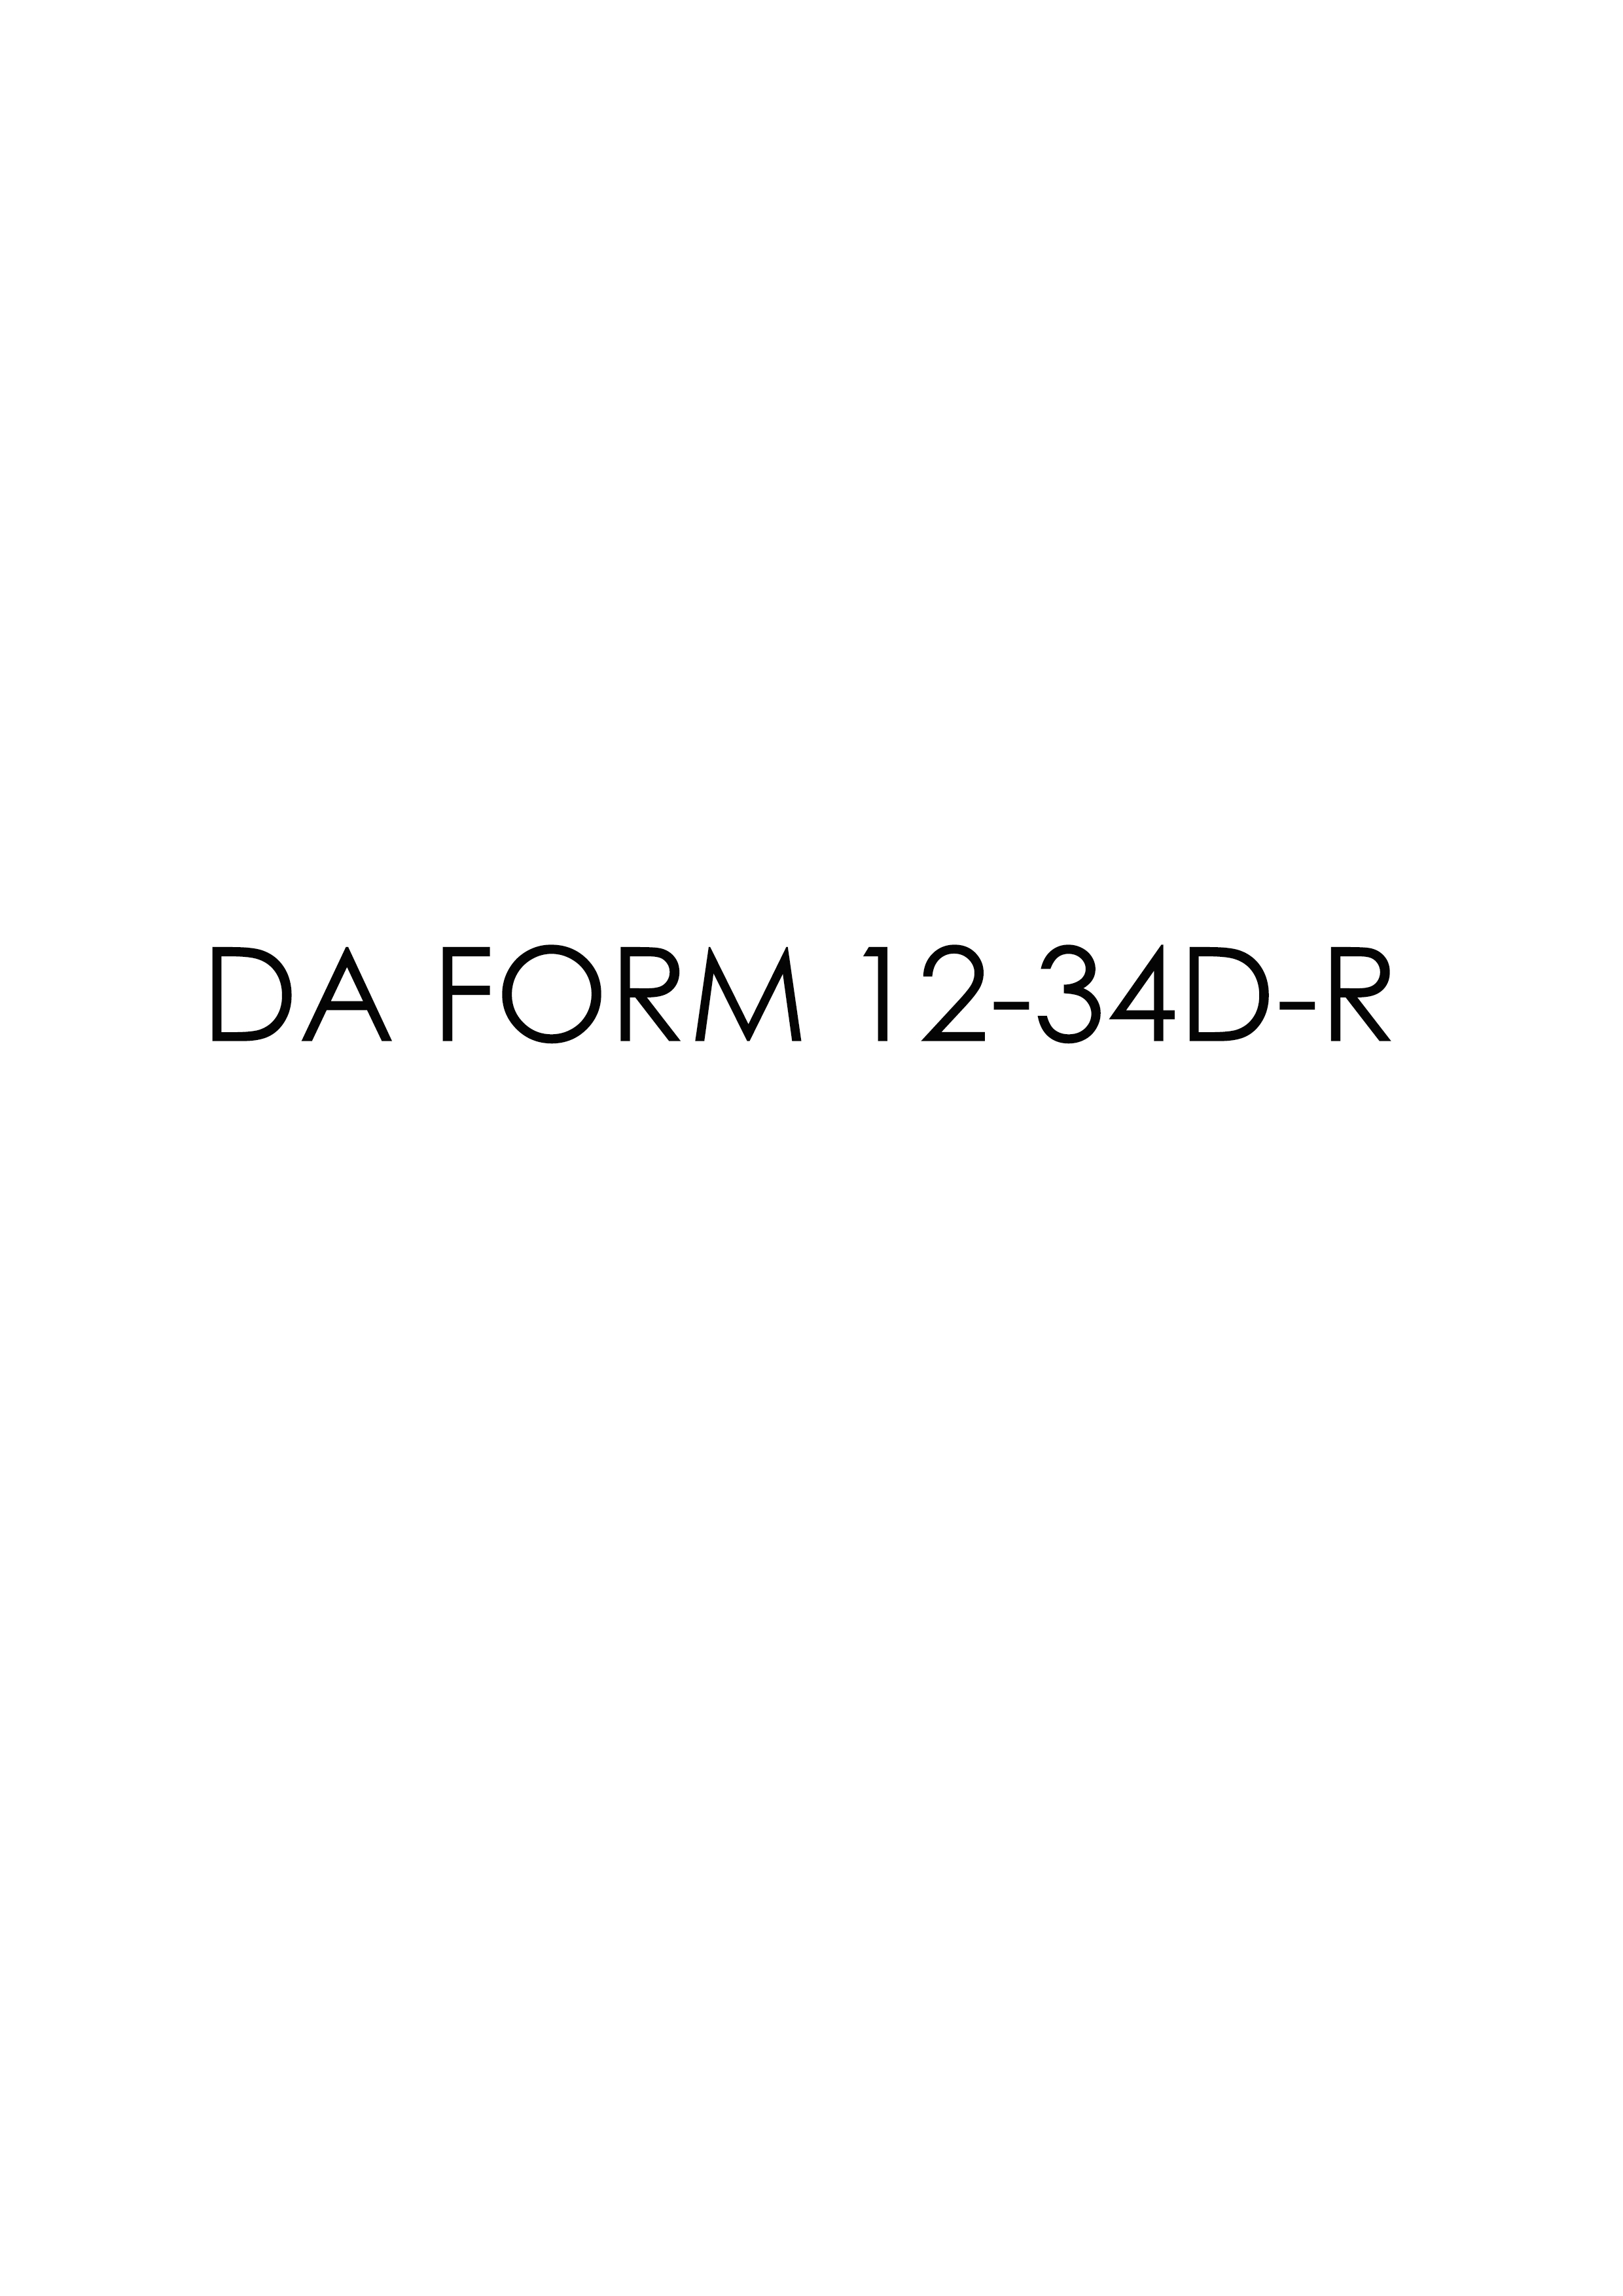 Download da 12-34D-R Form Free